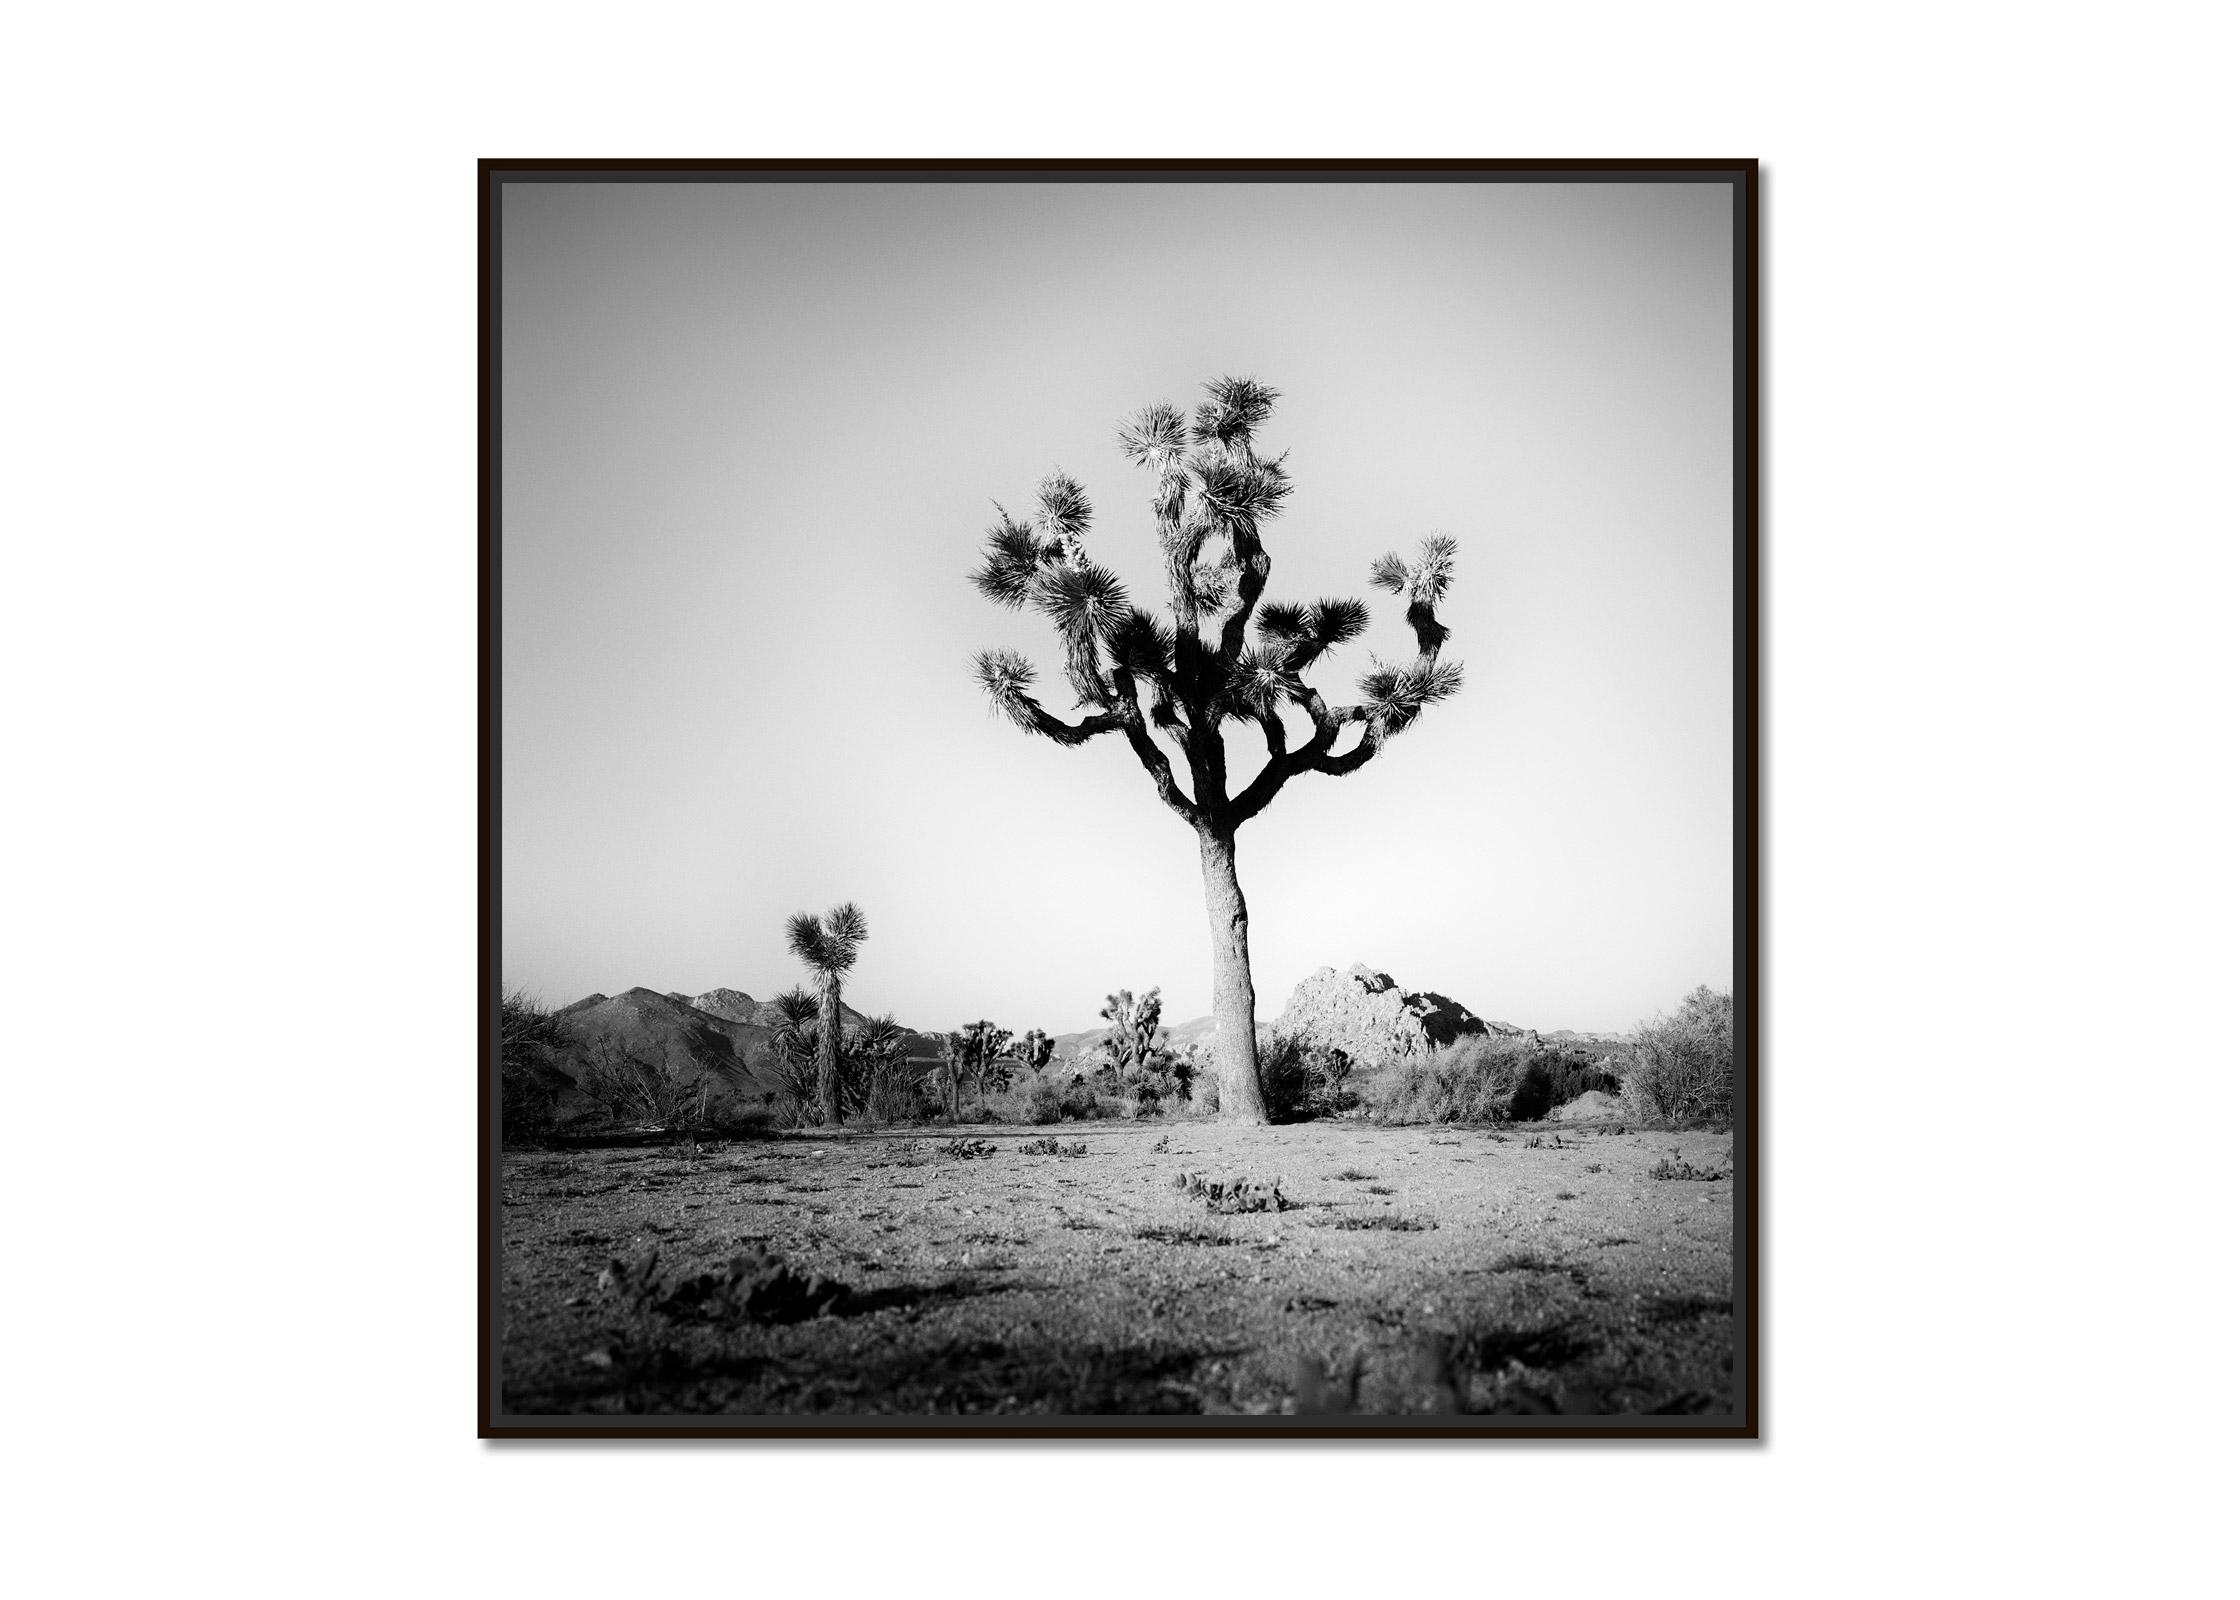 Joshua Tree, National Park, California, USA, B&W landscape photography art print - Photograph by Gerald Berghammer